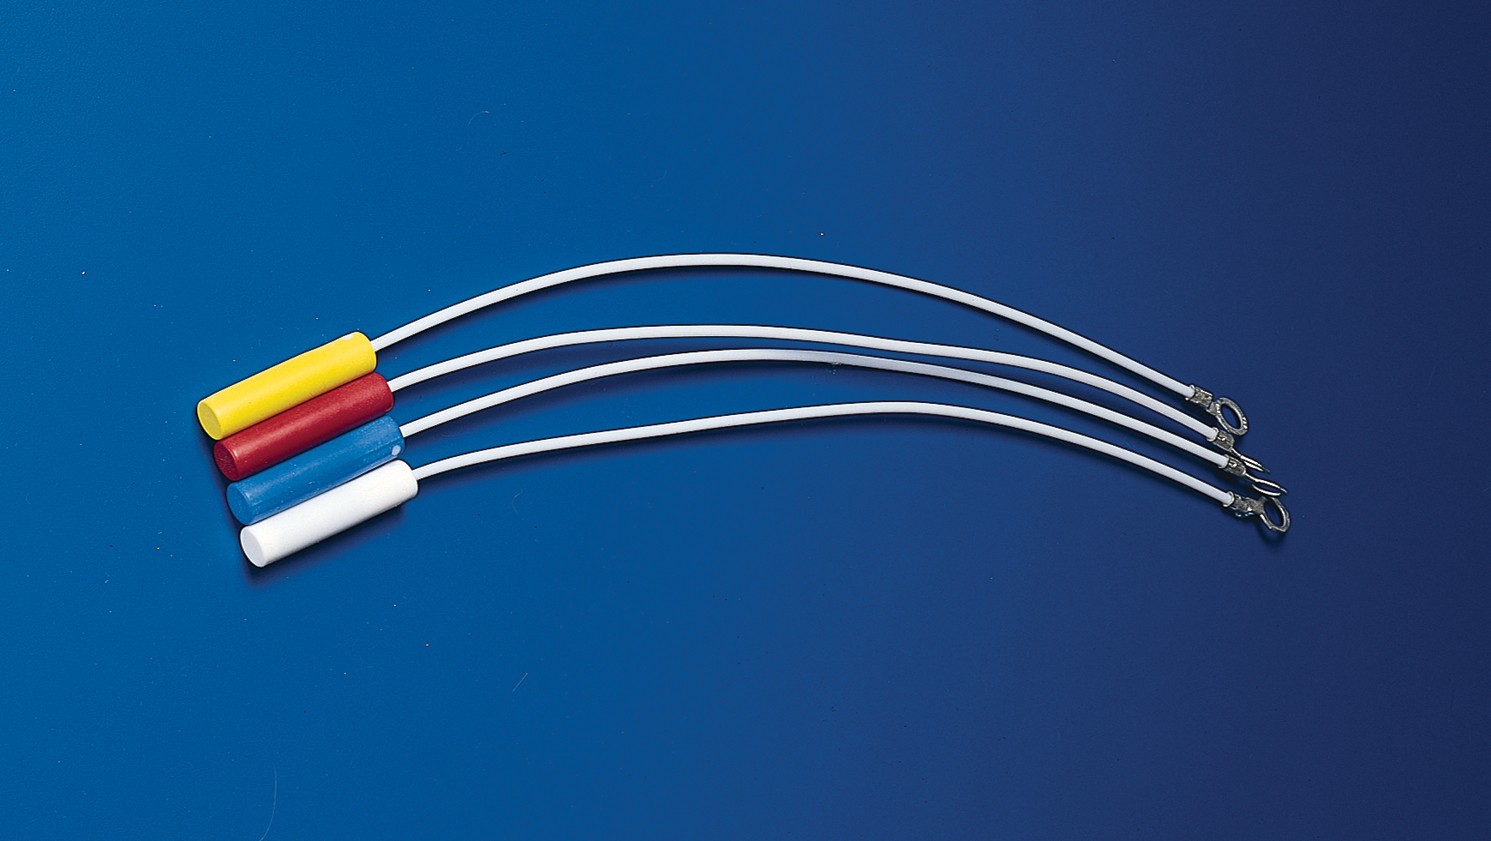 Spinbar Flexible Magnetic Stirring Bar Retrievers